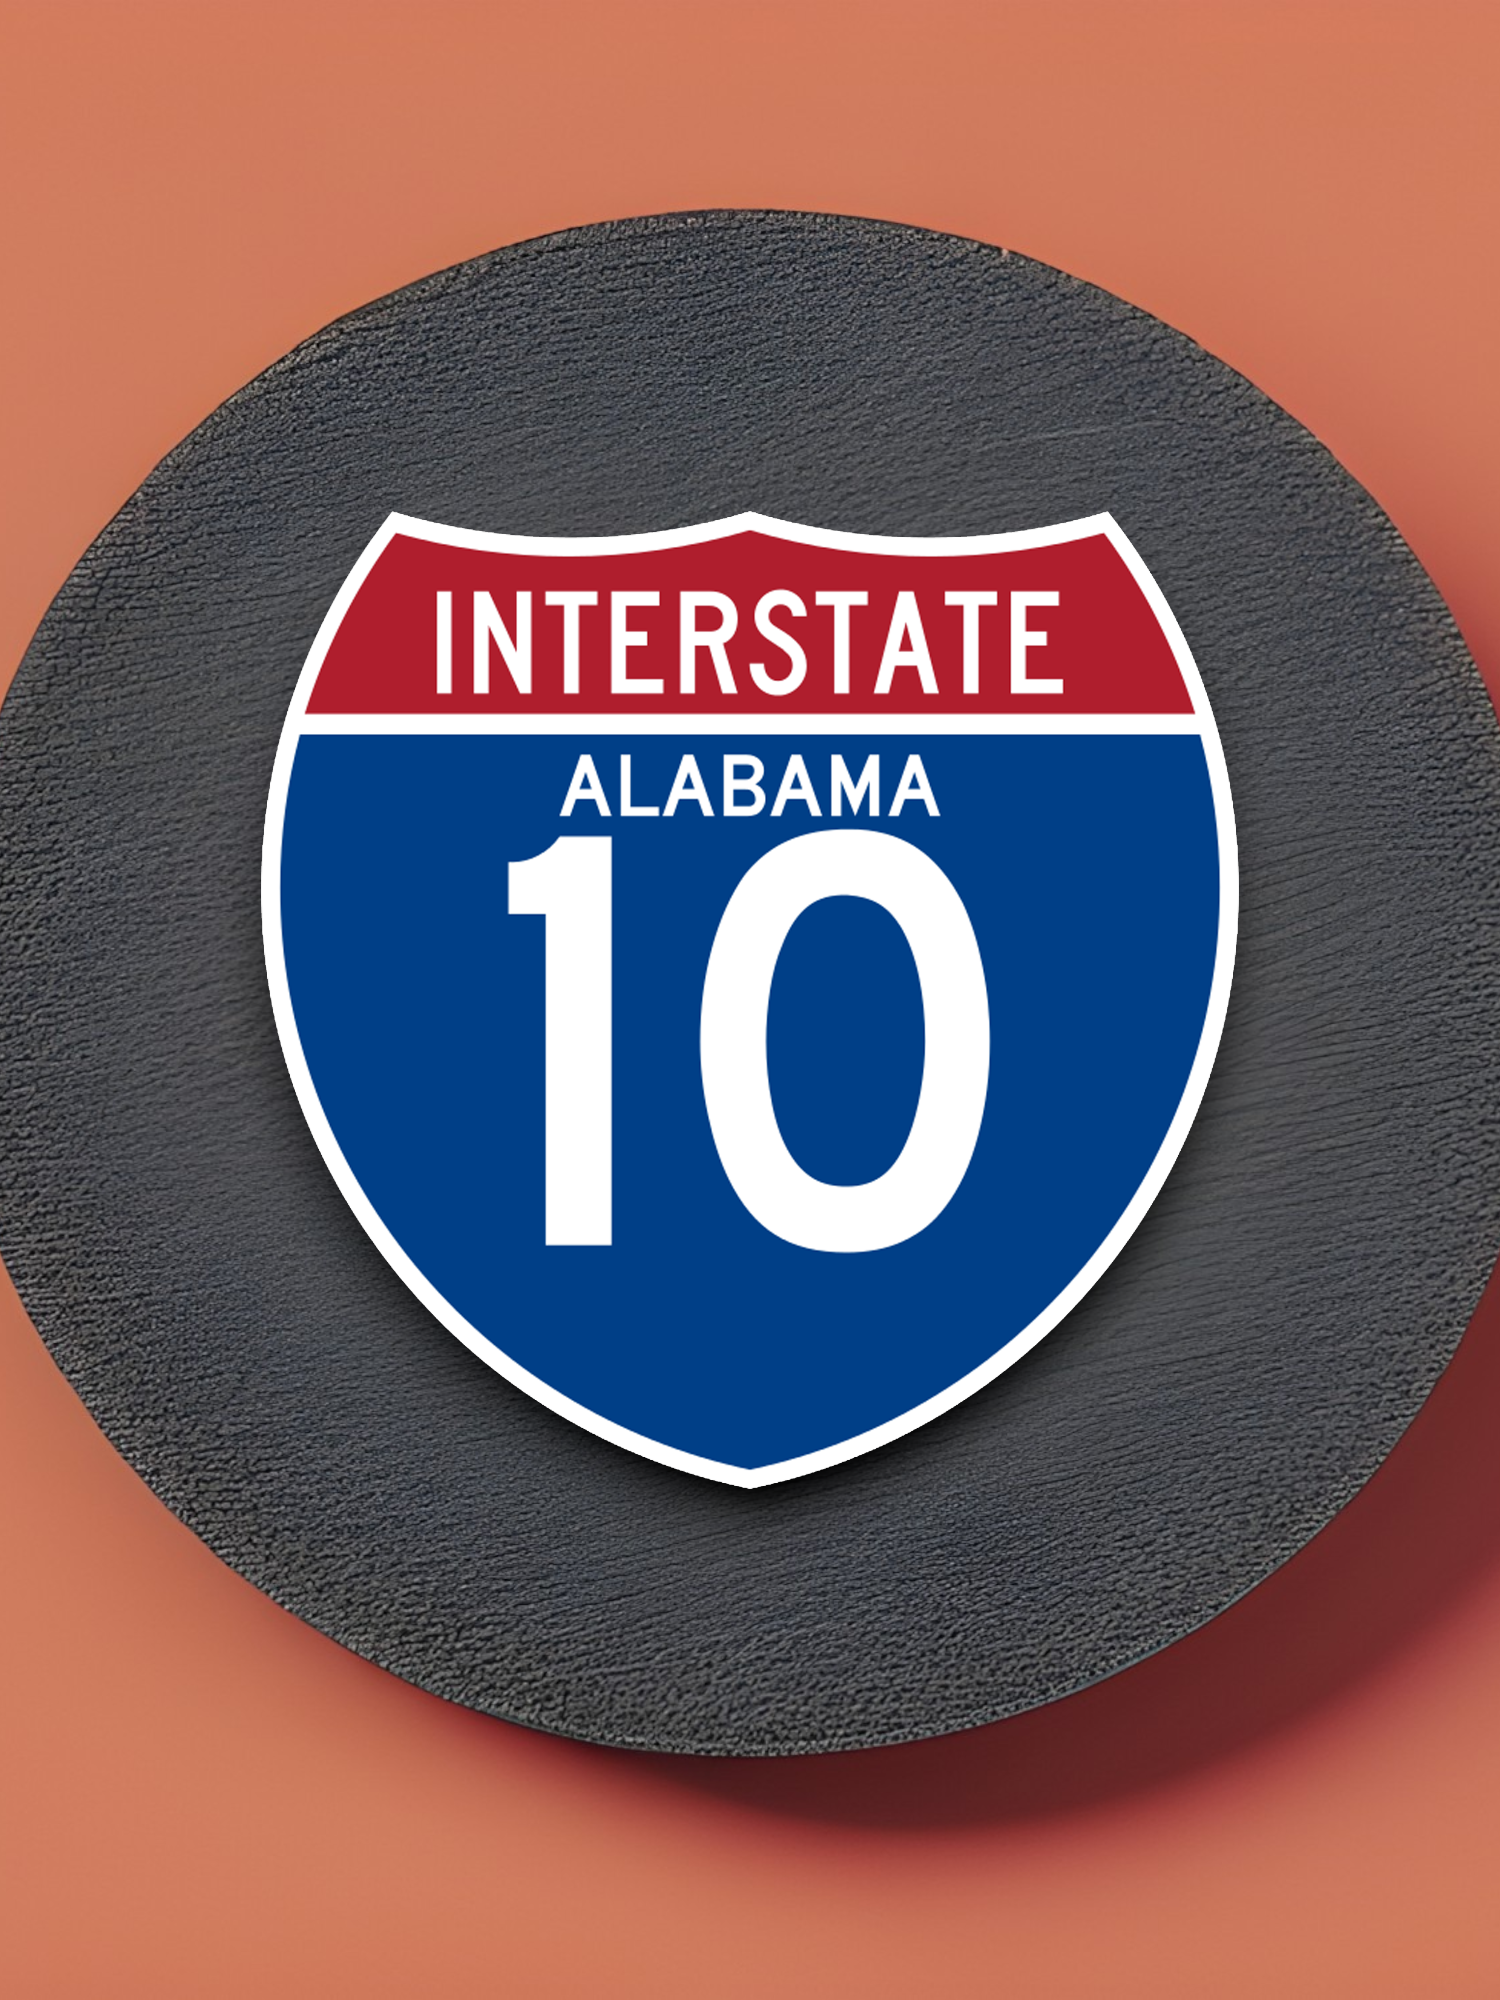 Interstate I-10 Alabama - Road Sign Sticker